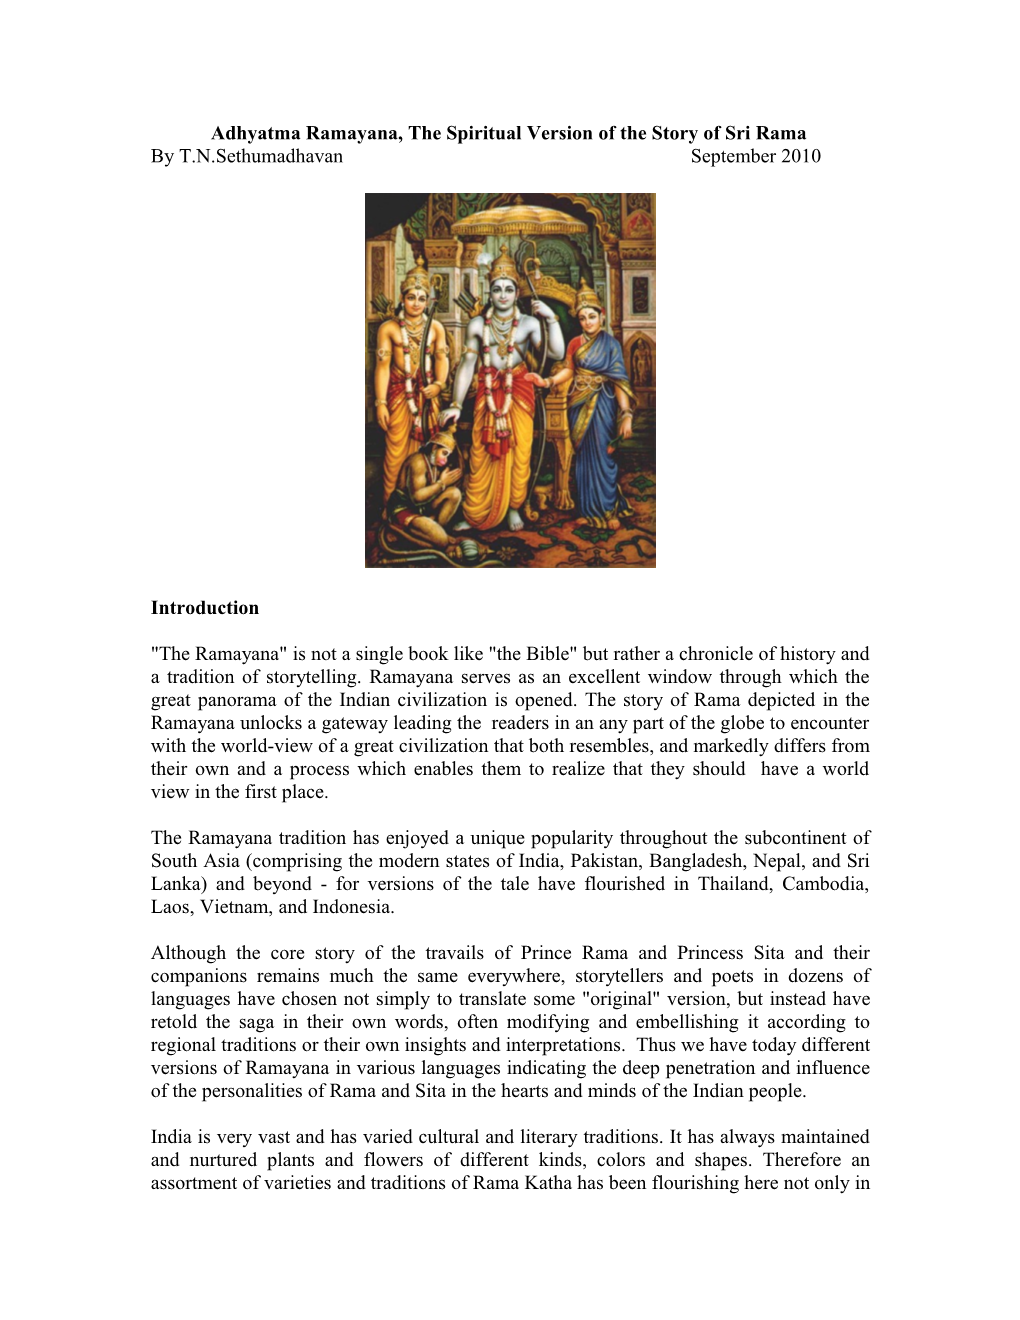 Adhyatma Ramayana, the Spiritual Version of the Story of Sri Rama